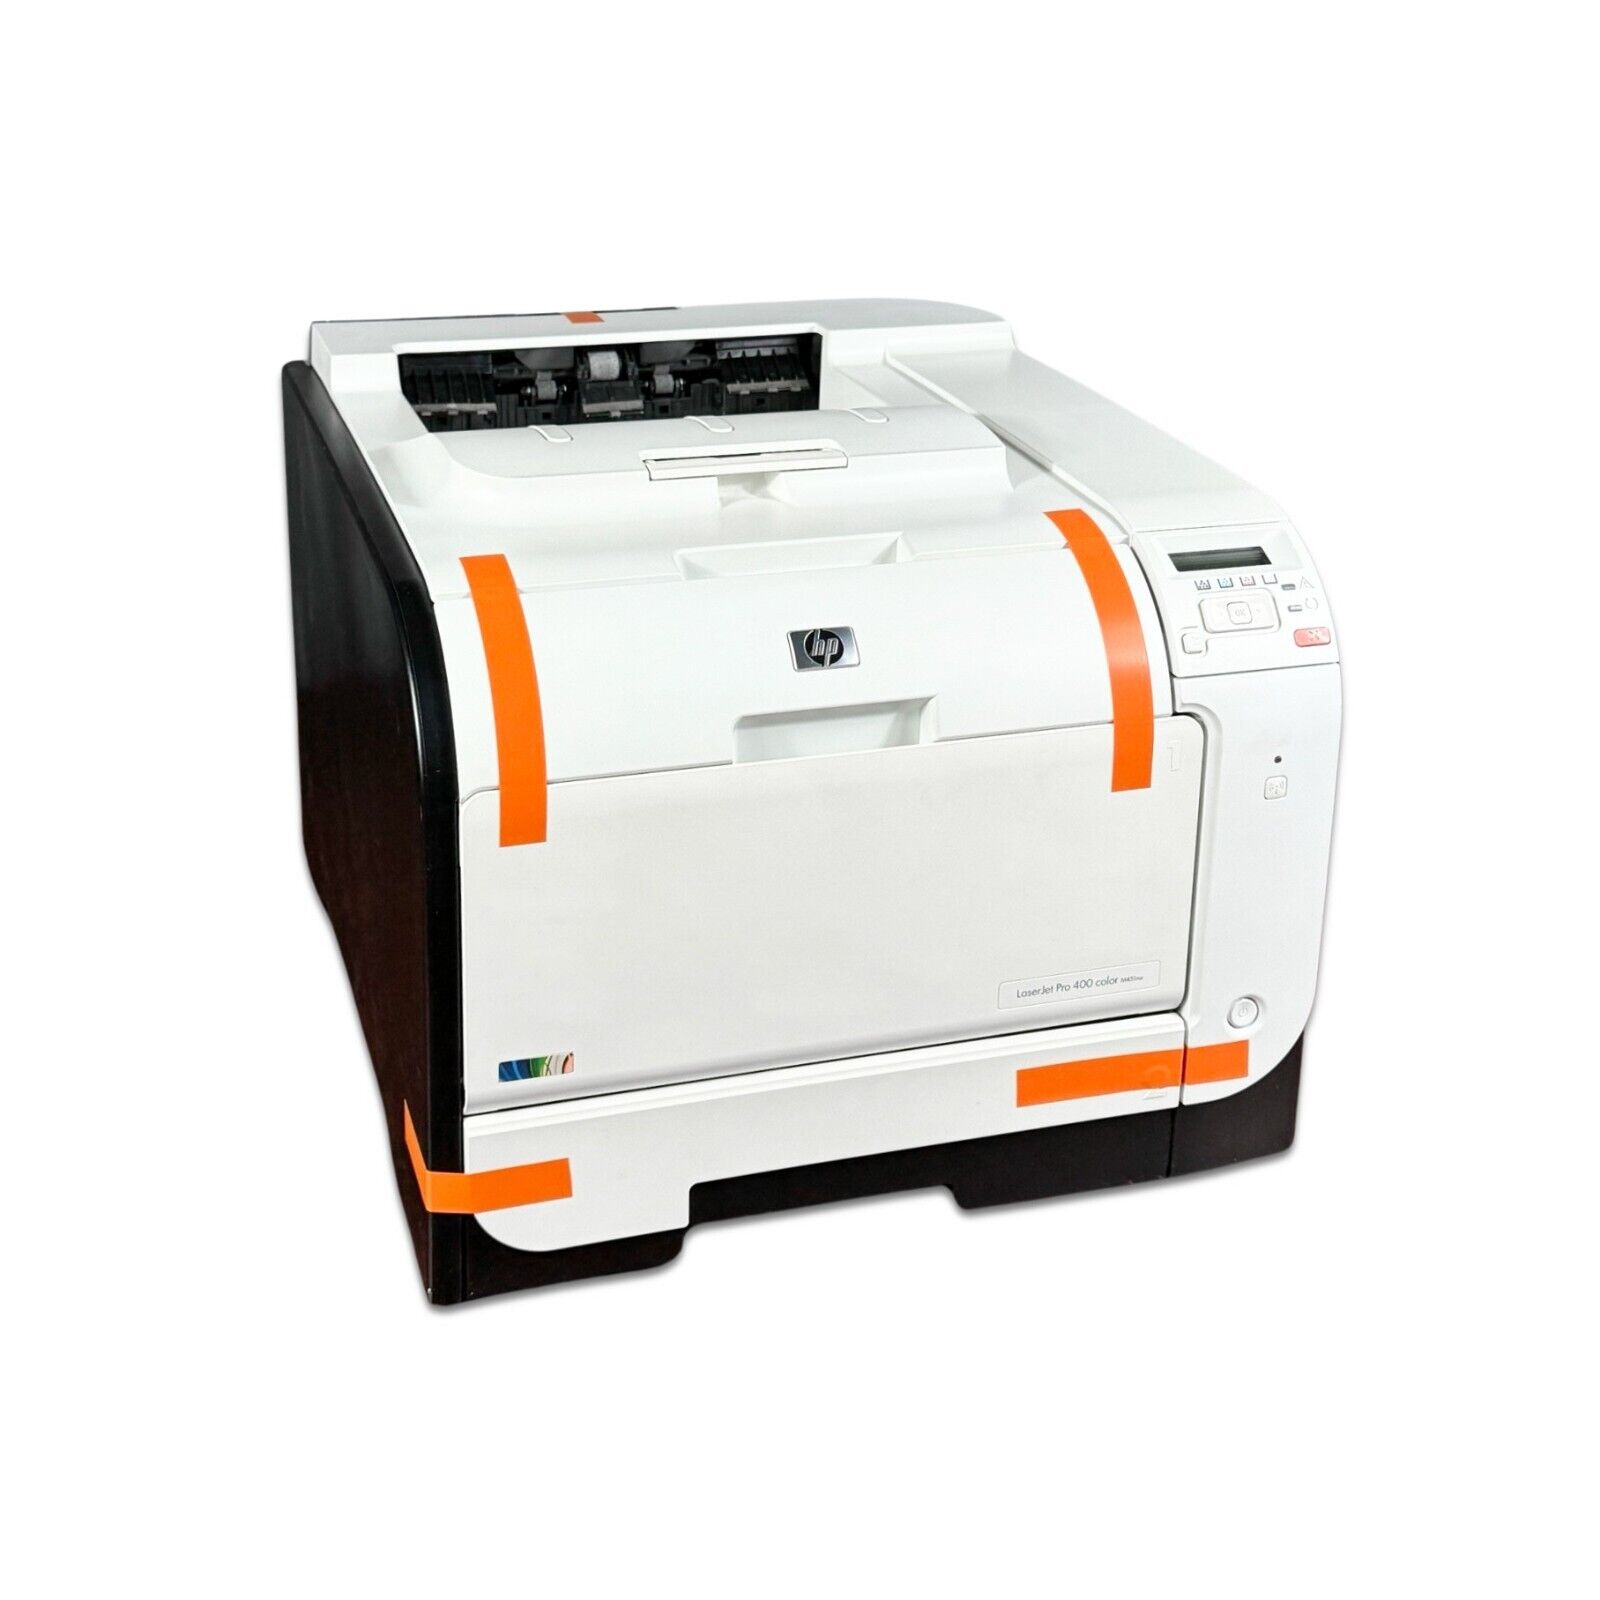 HP LaserJet Pro 400 Color M451nw Wireless Network Laser Printer CE956A